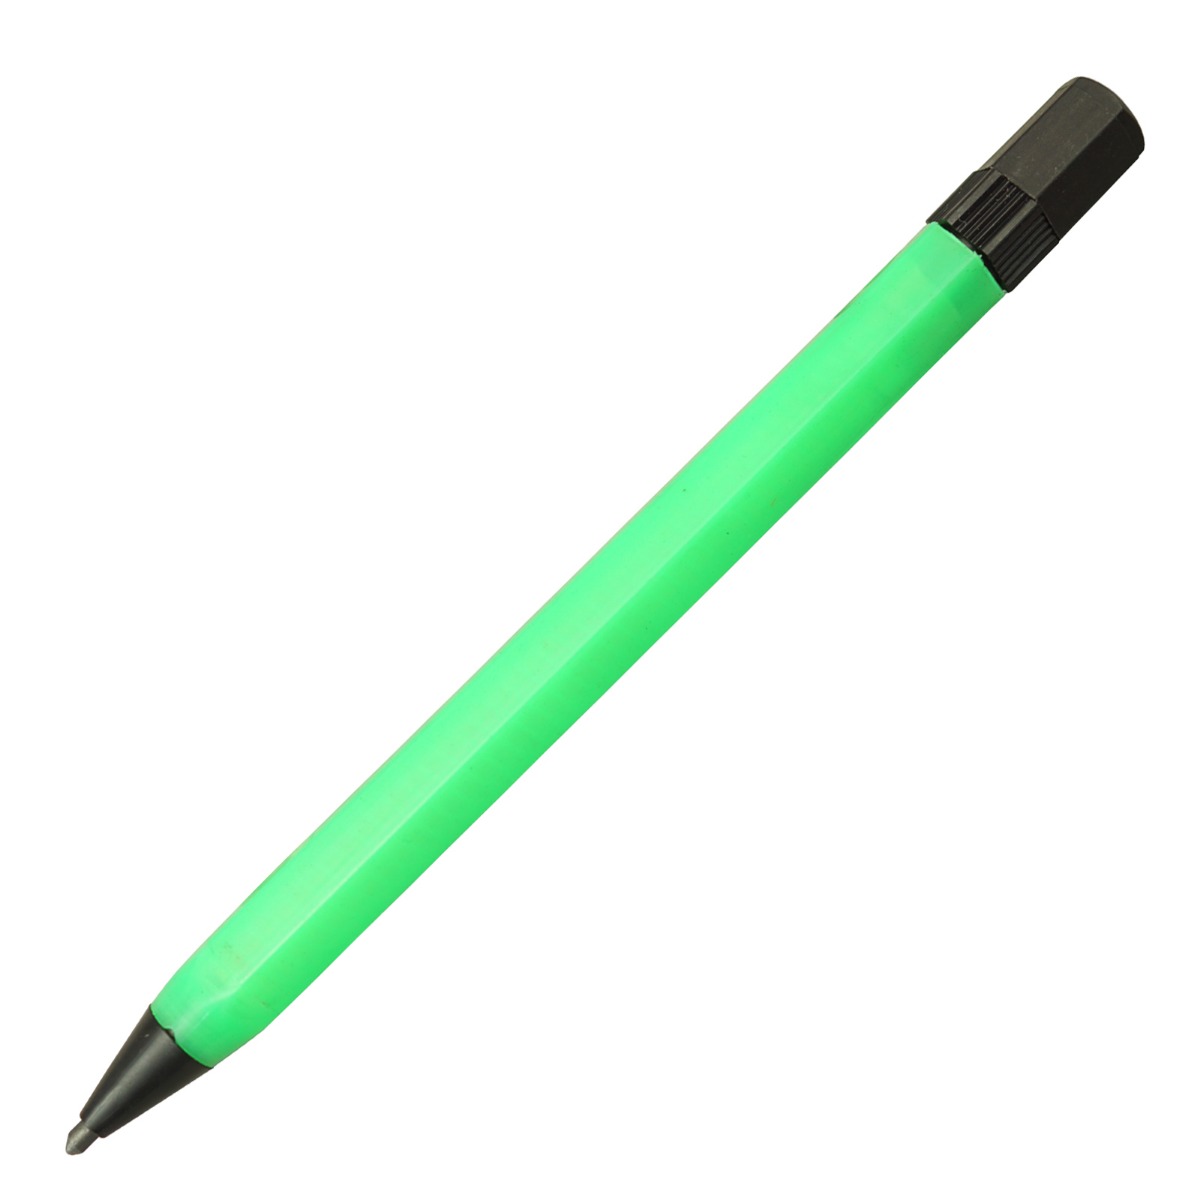  Penhouse Model No :17071 2.0 mm   Green Color Body Twist Type Tip Pencil